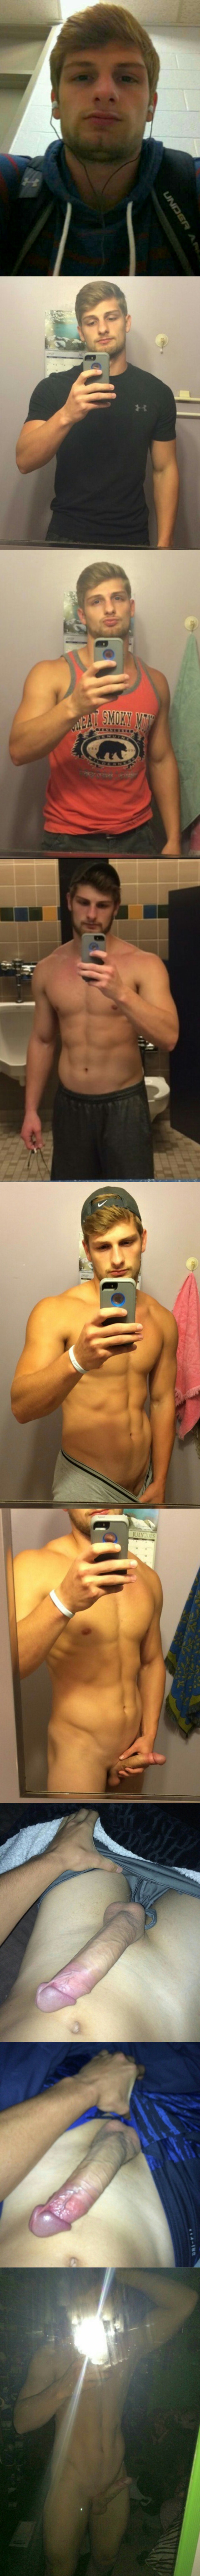 Naked selfie snapchat